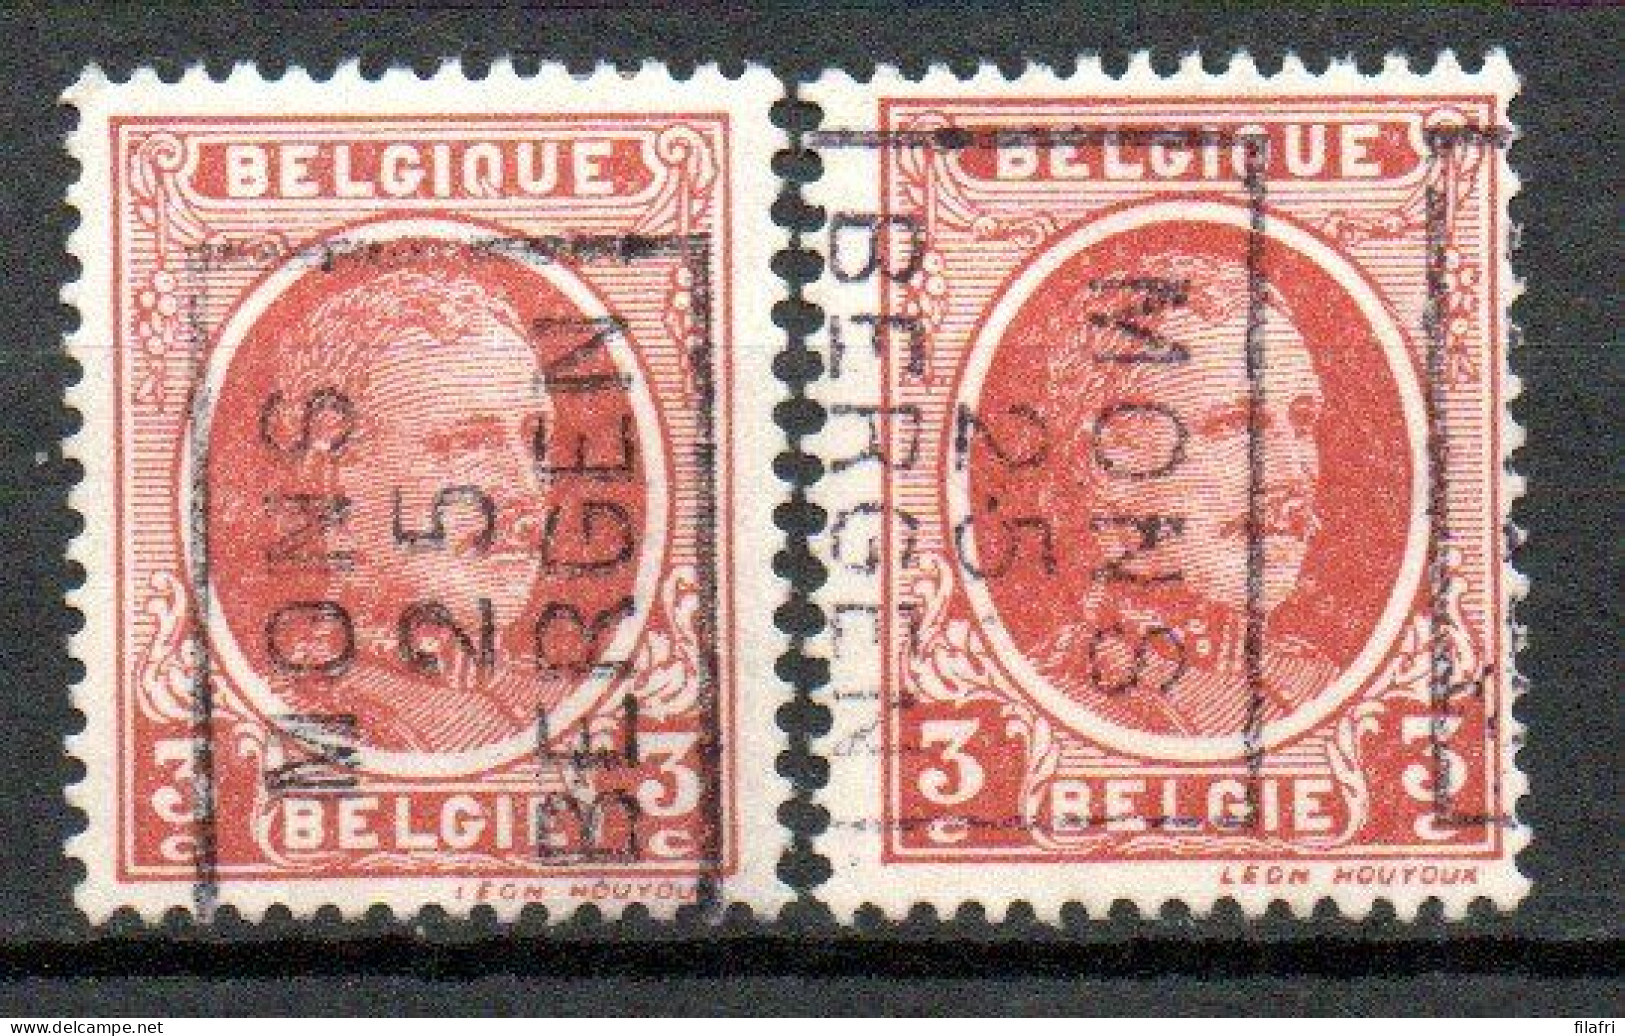 3540 Voorafstempeling Op Nr 192 - MONS 25 BERGEN - Positie A & B - Rollenmarken 1920-29